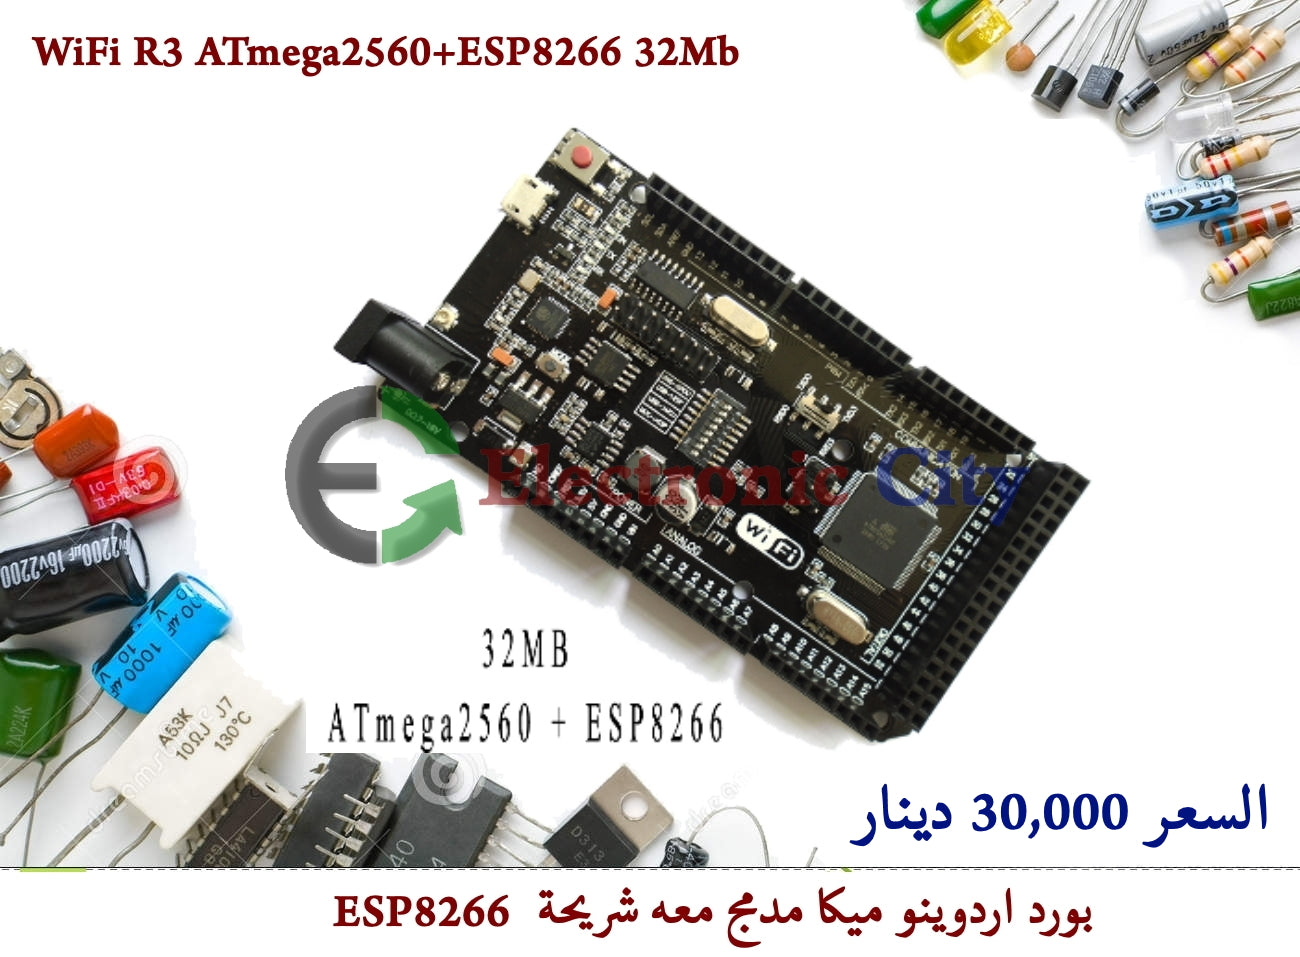 WiFi R3 ATmega2560+ESP8266 32Mb S6 X13670